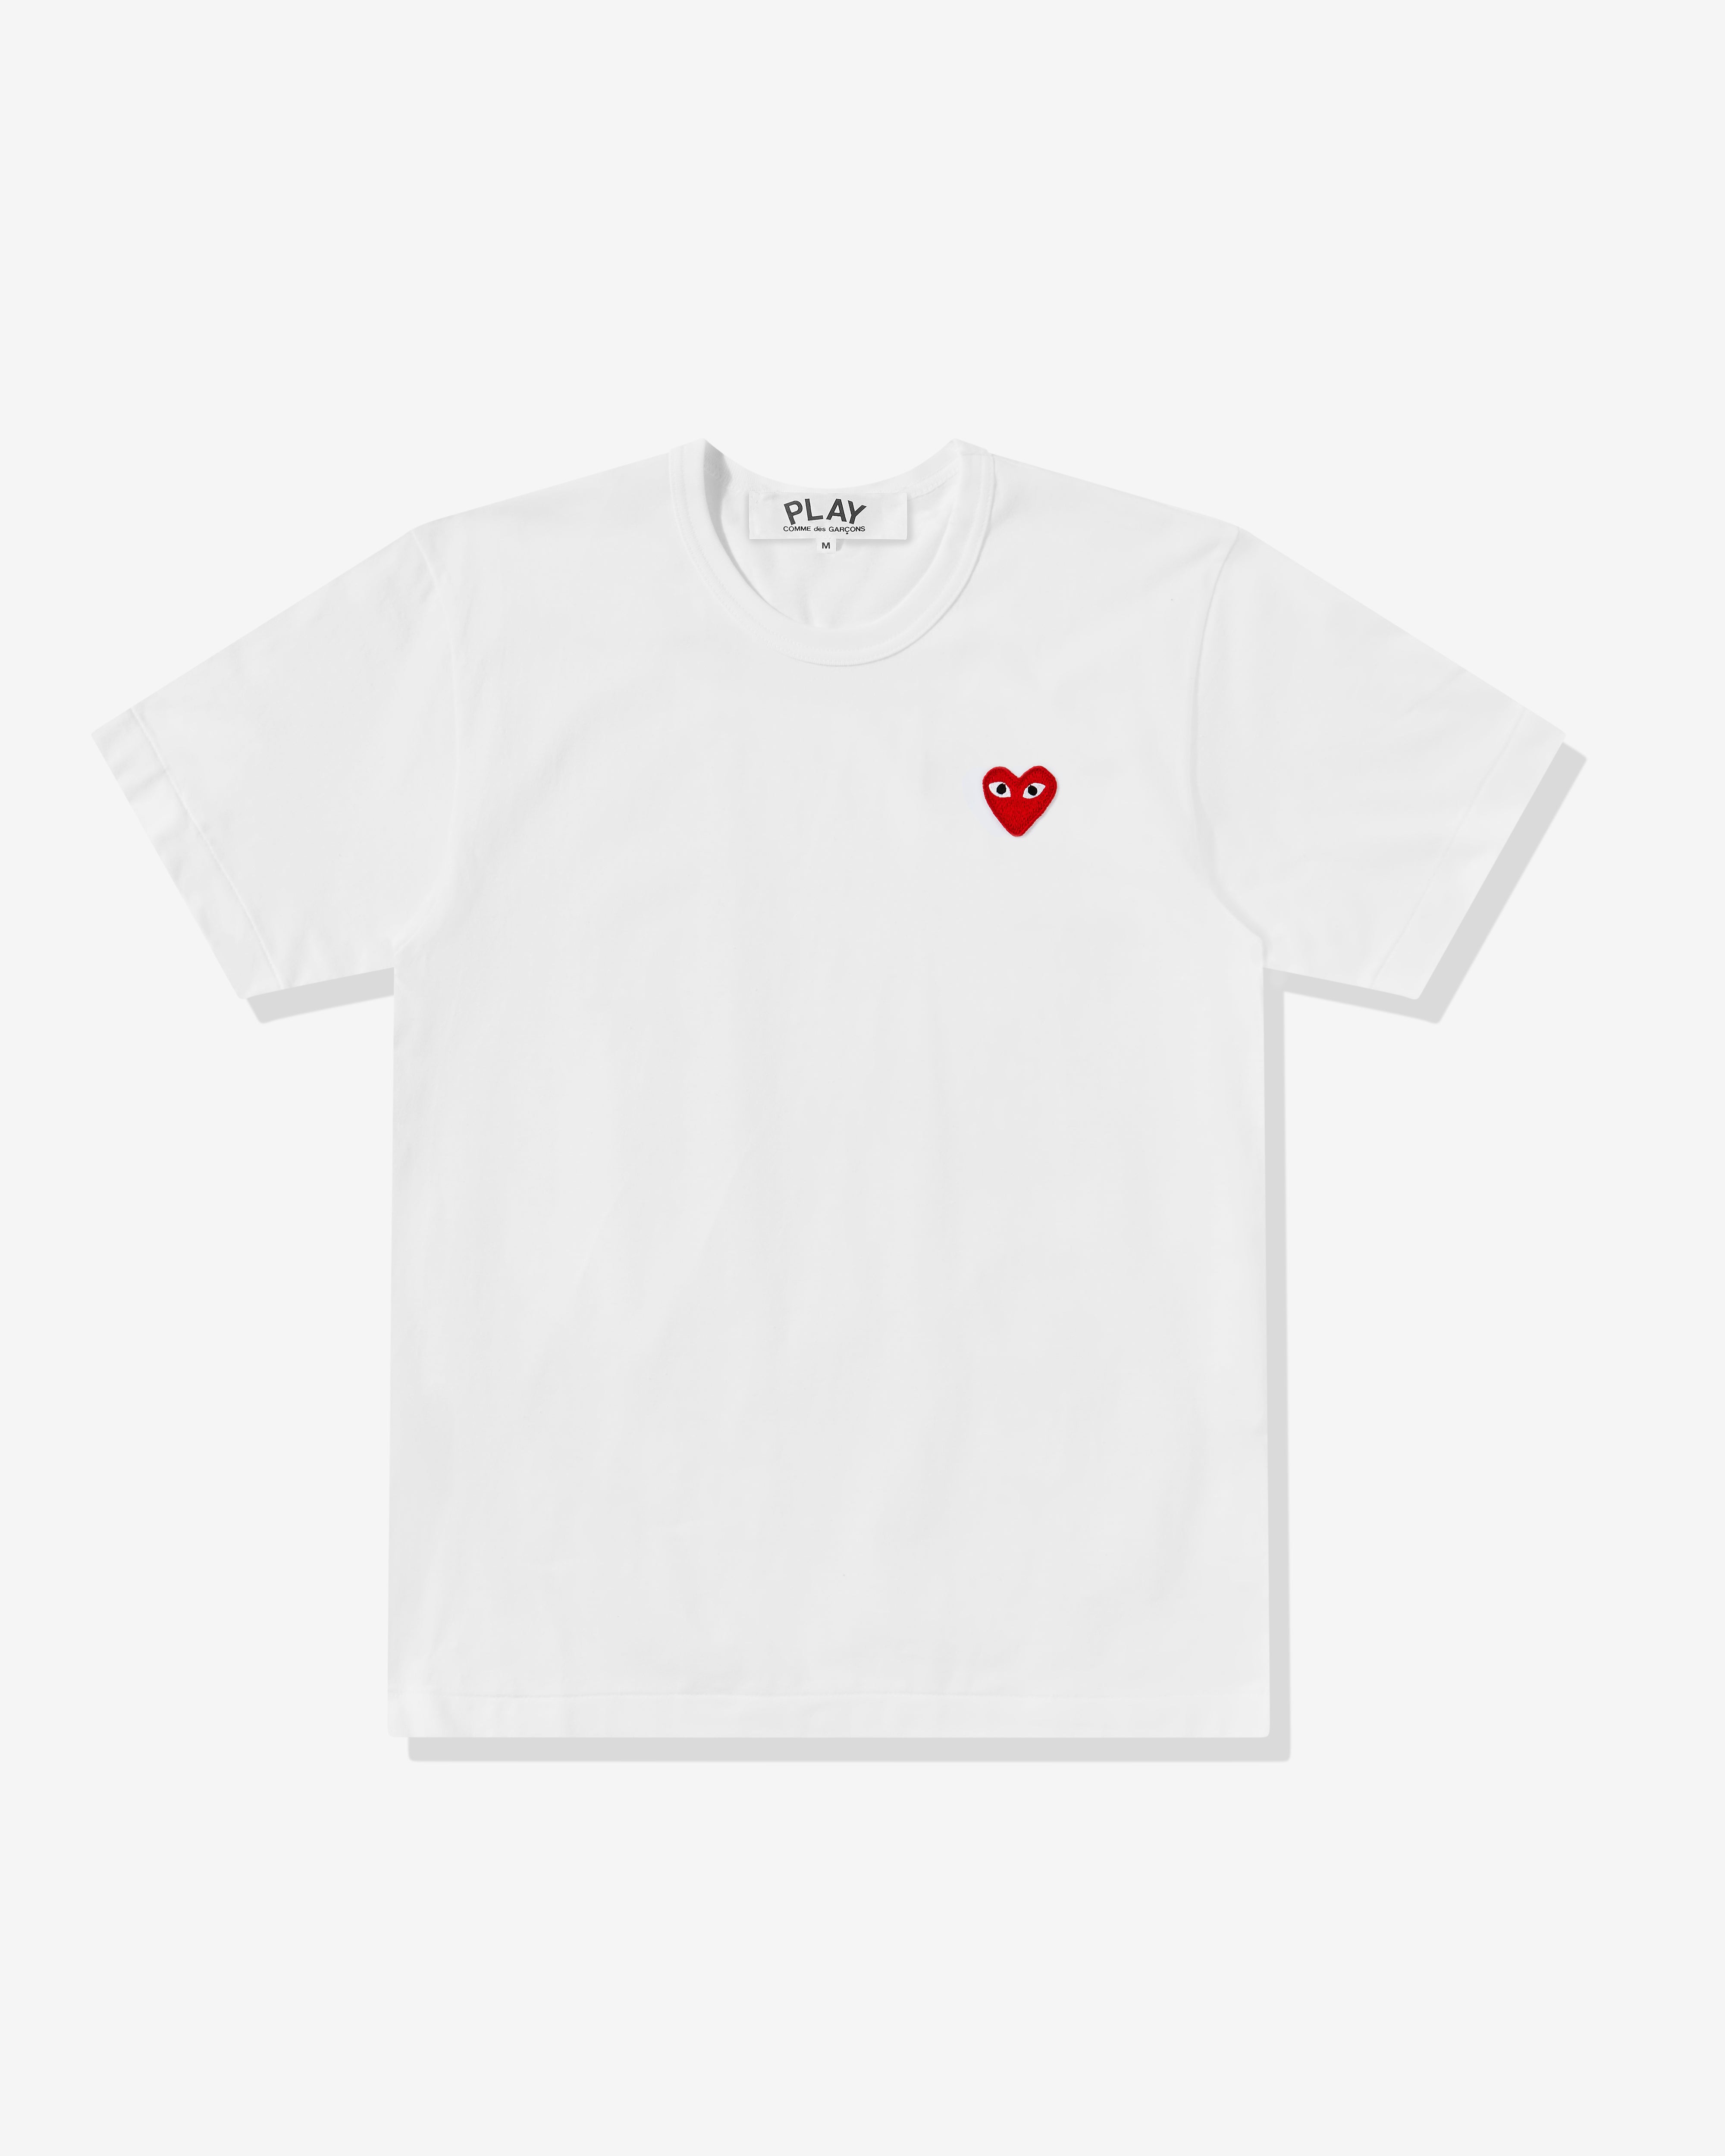 Play: Red T-Shirt (White) | DSML E-SHOP